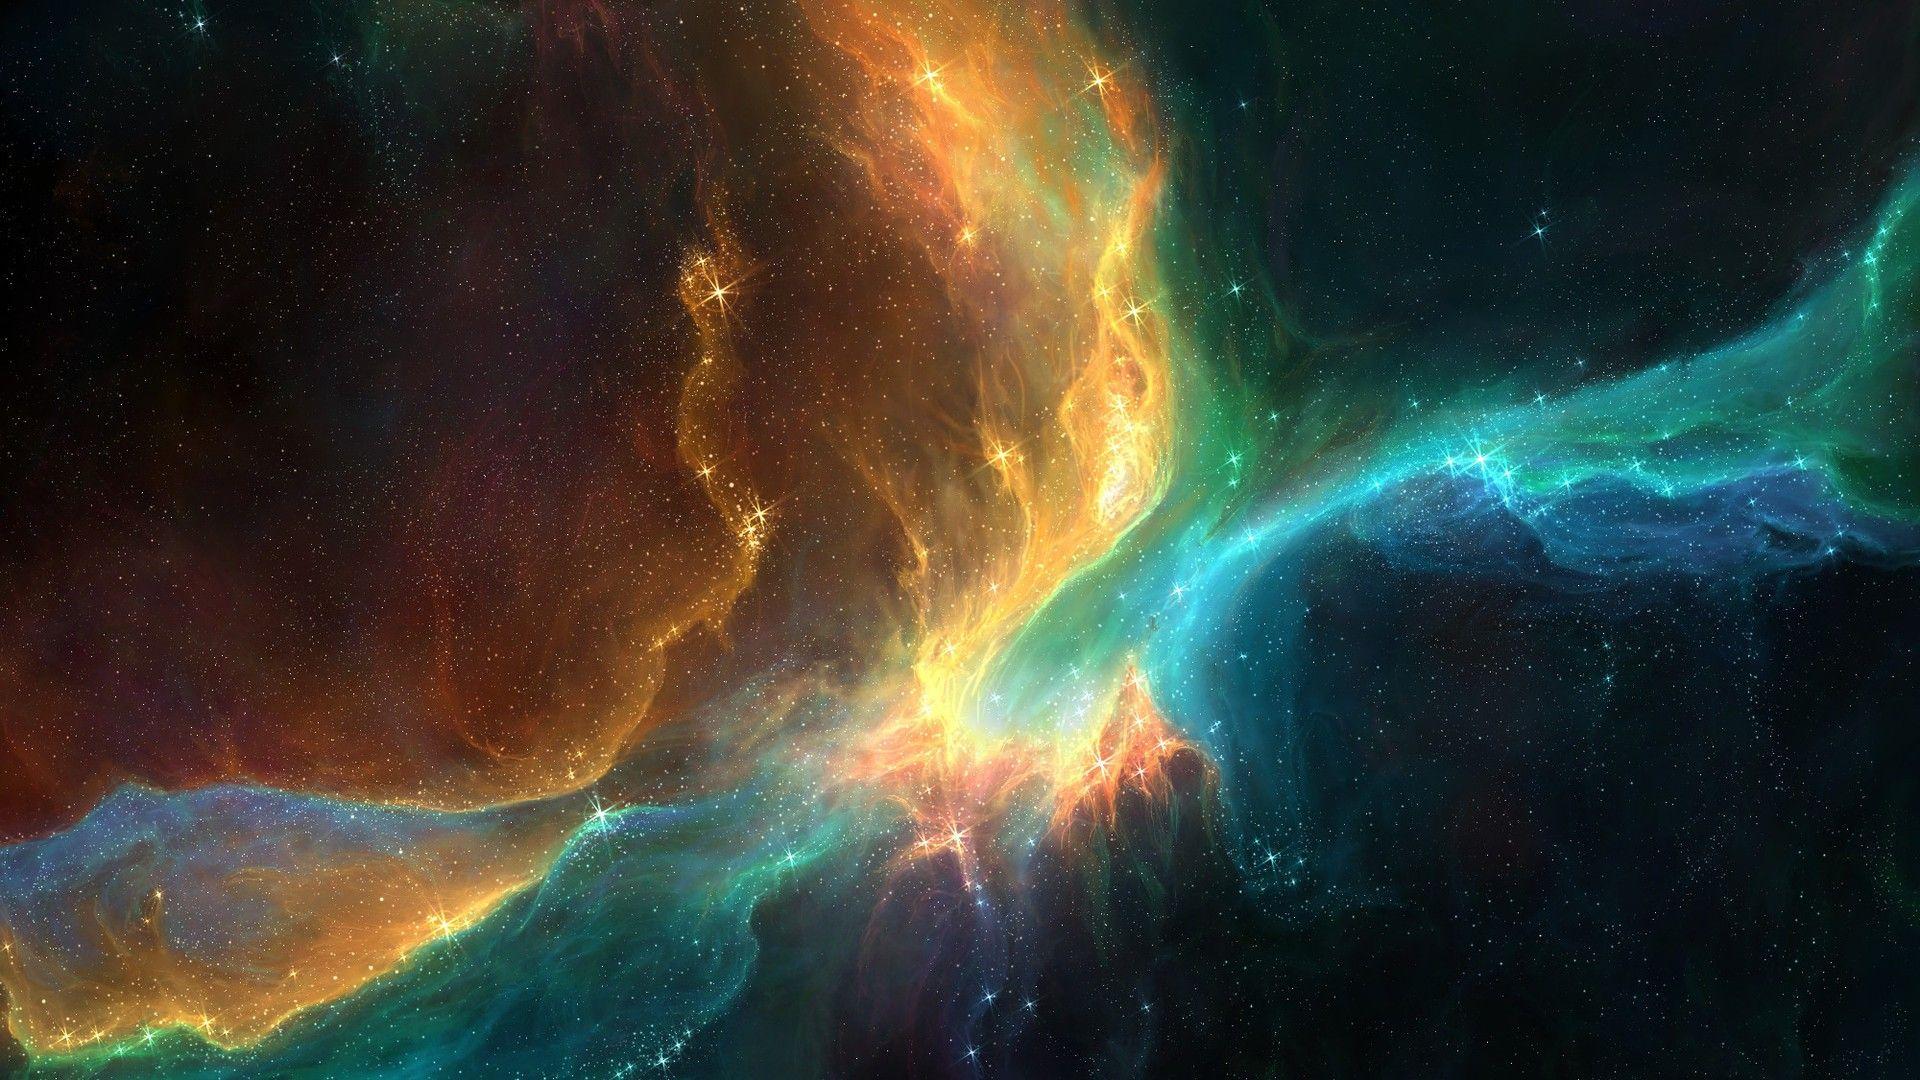 Outer Space Nebula Wallpaper Widescreen 2 HD Wallpaper. Nebula